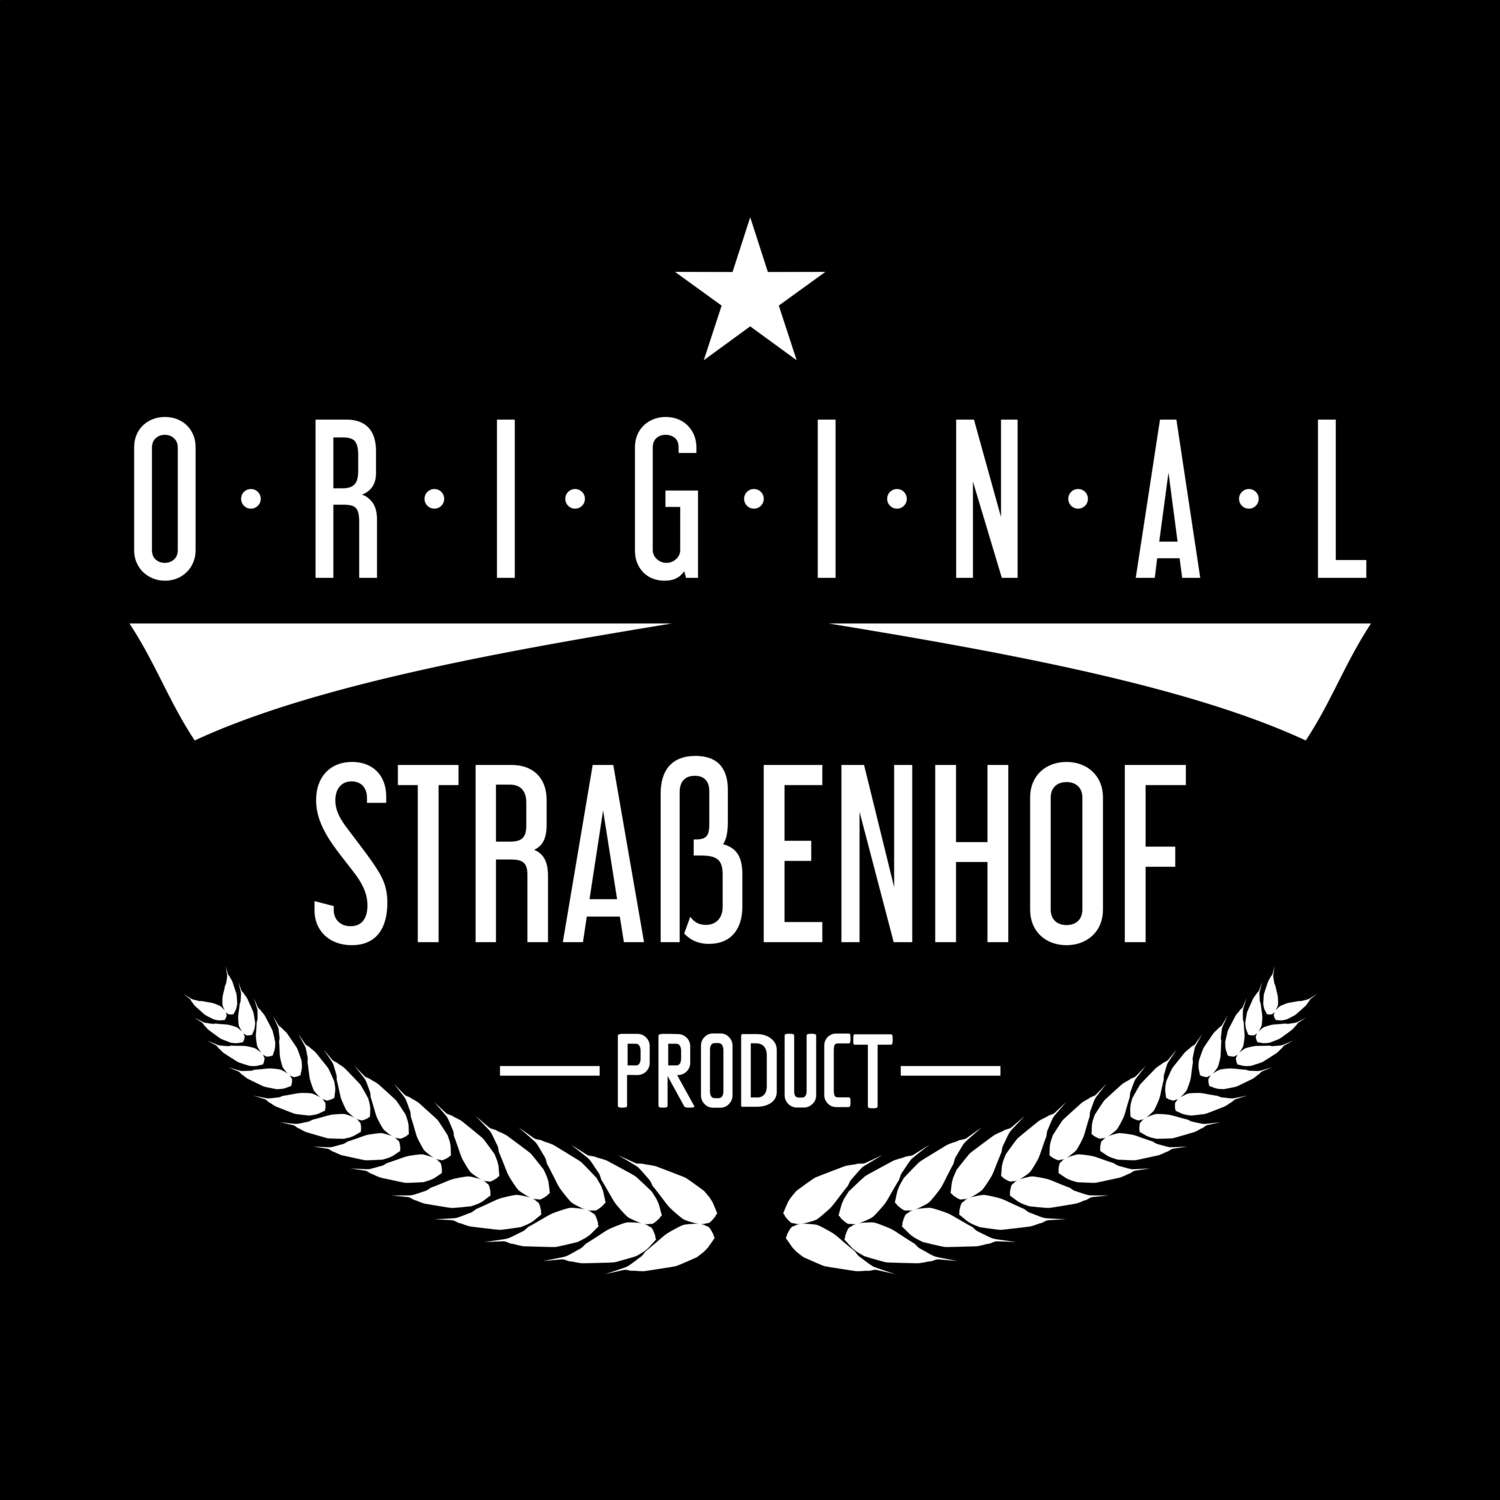 Straßenhof T-Shirt »Original Product«